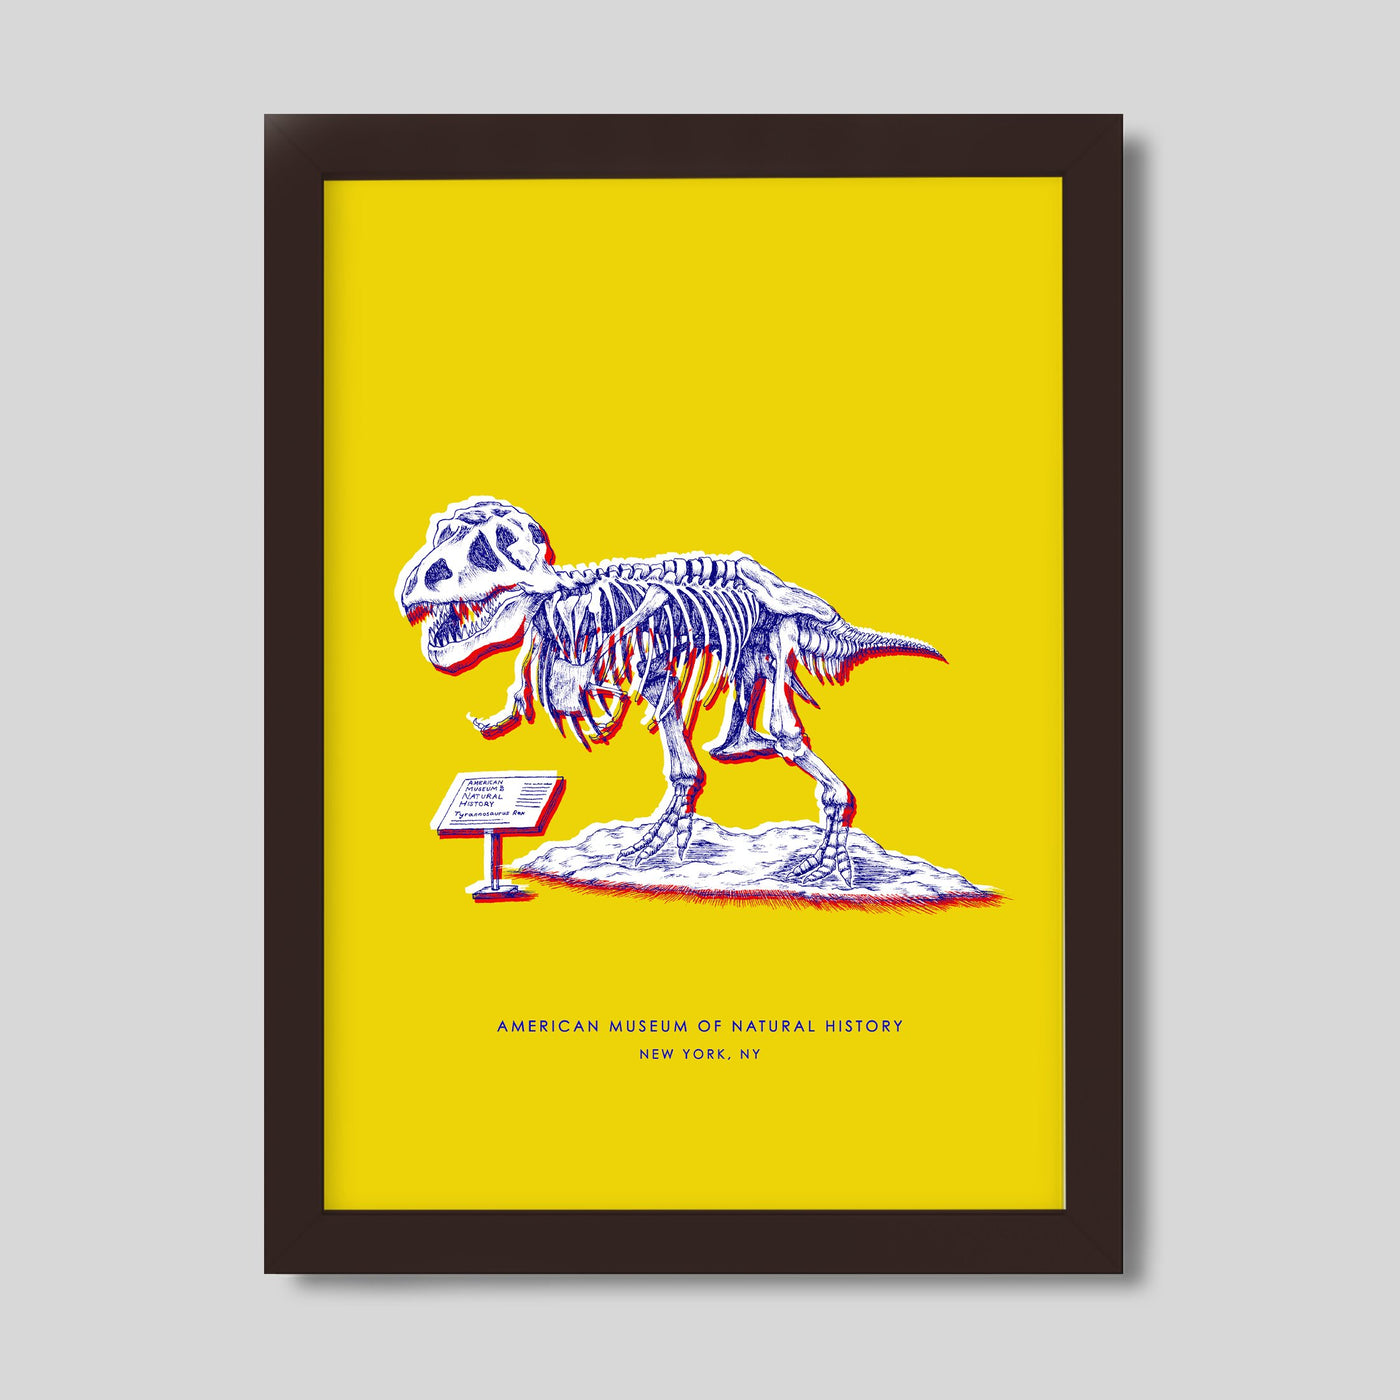 Gallery Prints Yellow Print / 8x10 / Walnut Frame New York Dinosaur Print Katie Kime